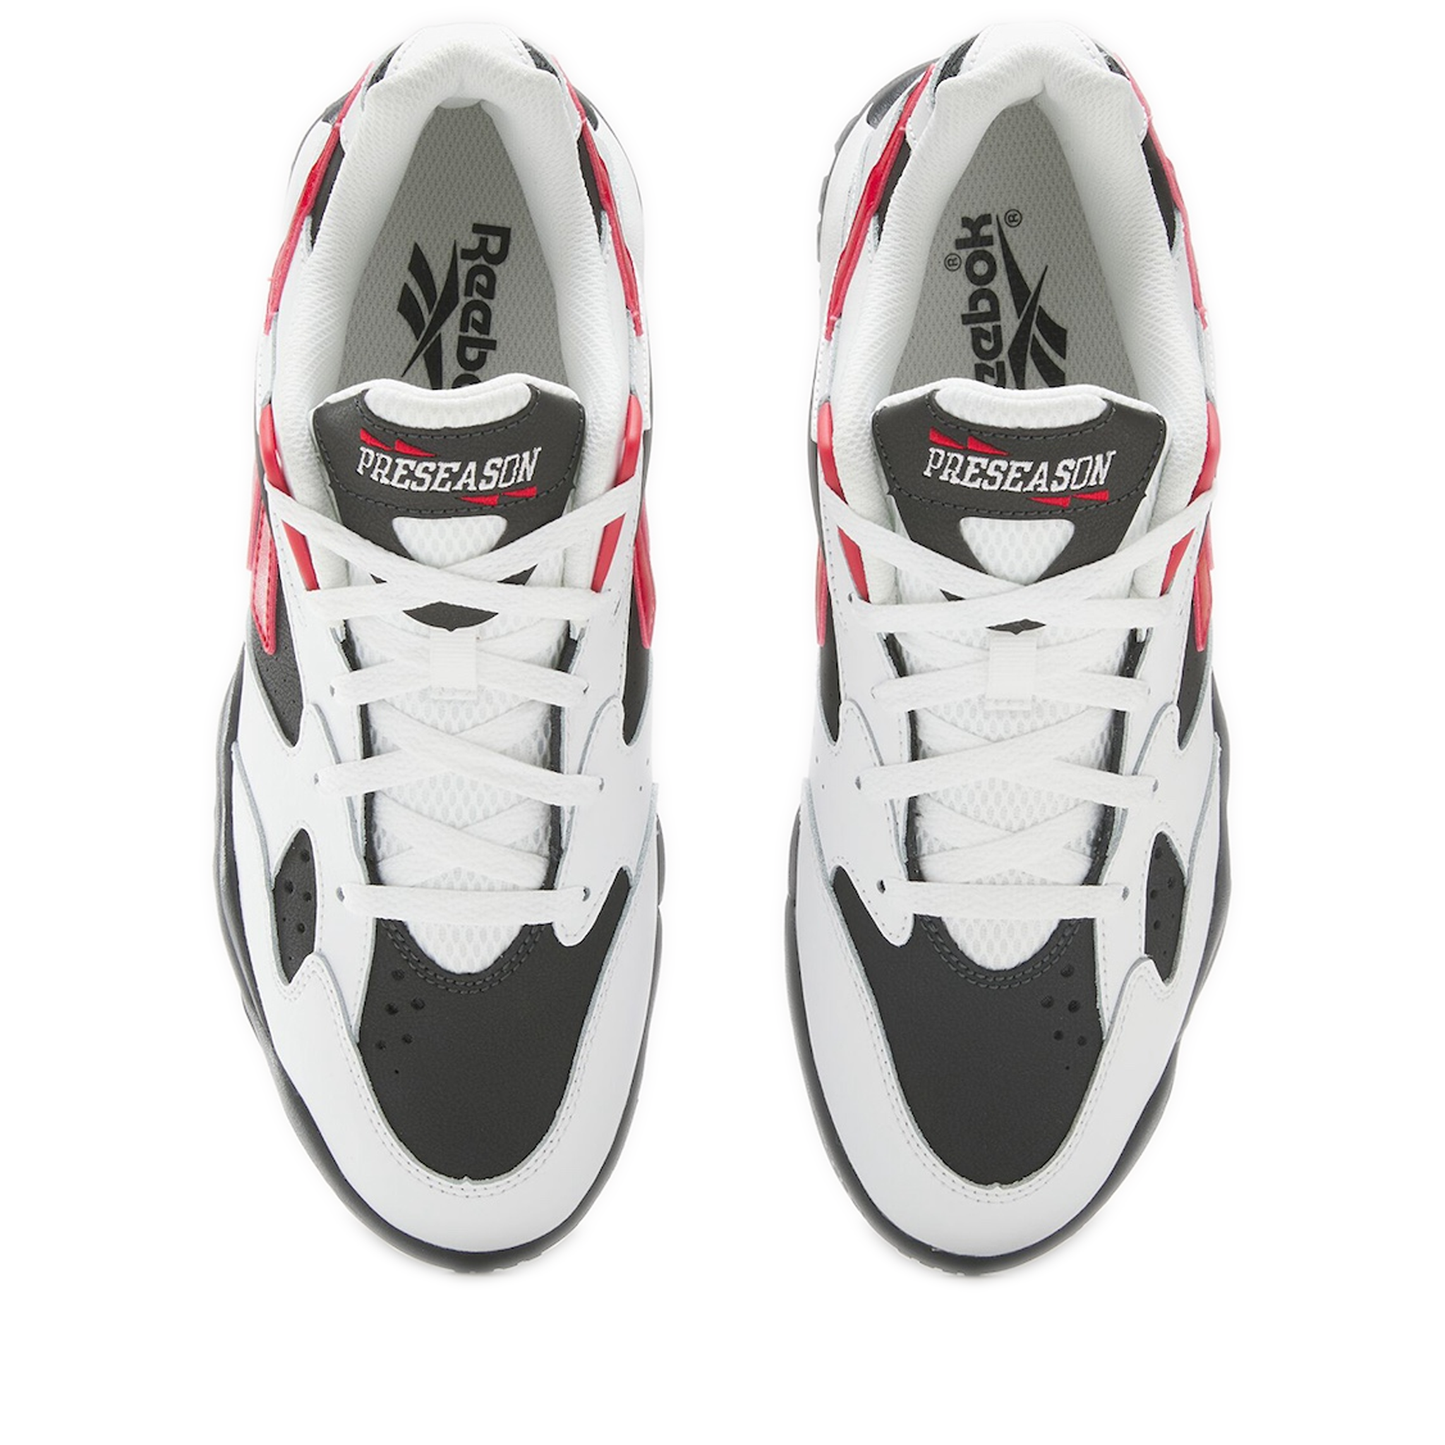 Men's Reebok Preseason 94 Dynamic Shoes - Ftwr White / Night Black / Flash Red